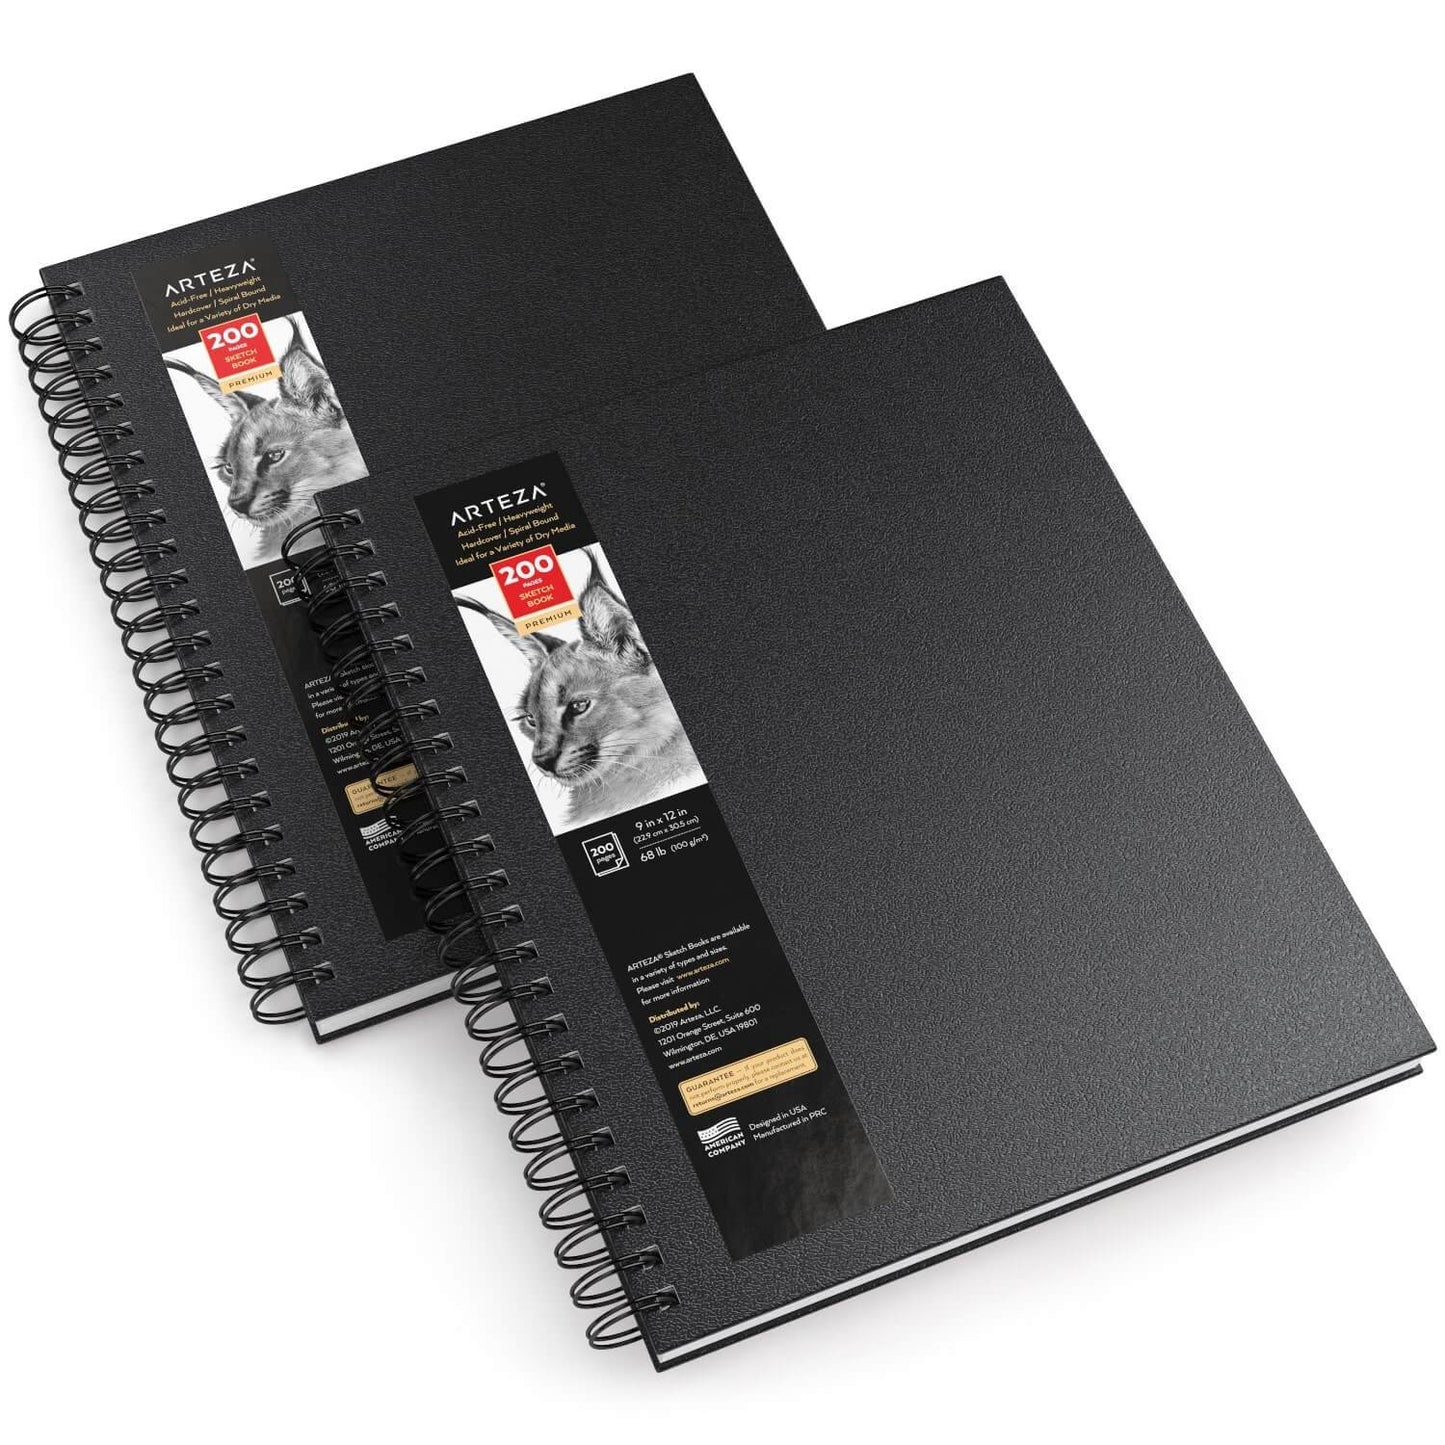 Art-N-Fly Black Sketch Pad Mini 5.5x8.5 2 Pack - Black Paper Sketchbook  for Drawings, Perforated Edge on Spiral 100 Sheets Total - Art Sketch Book